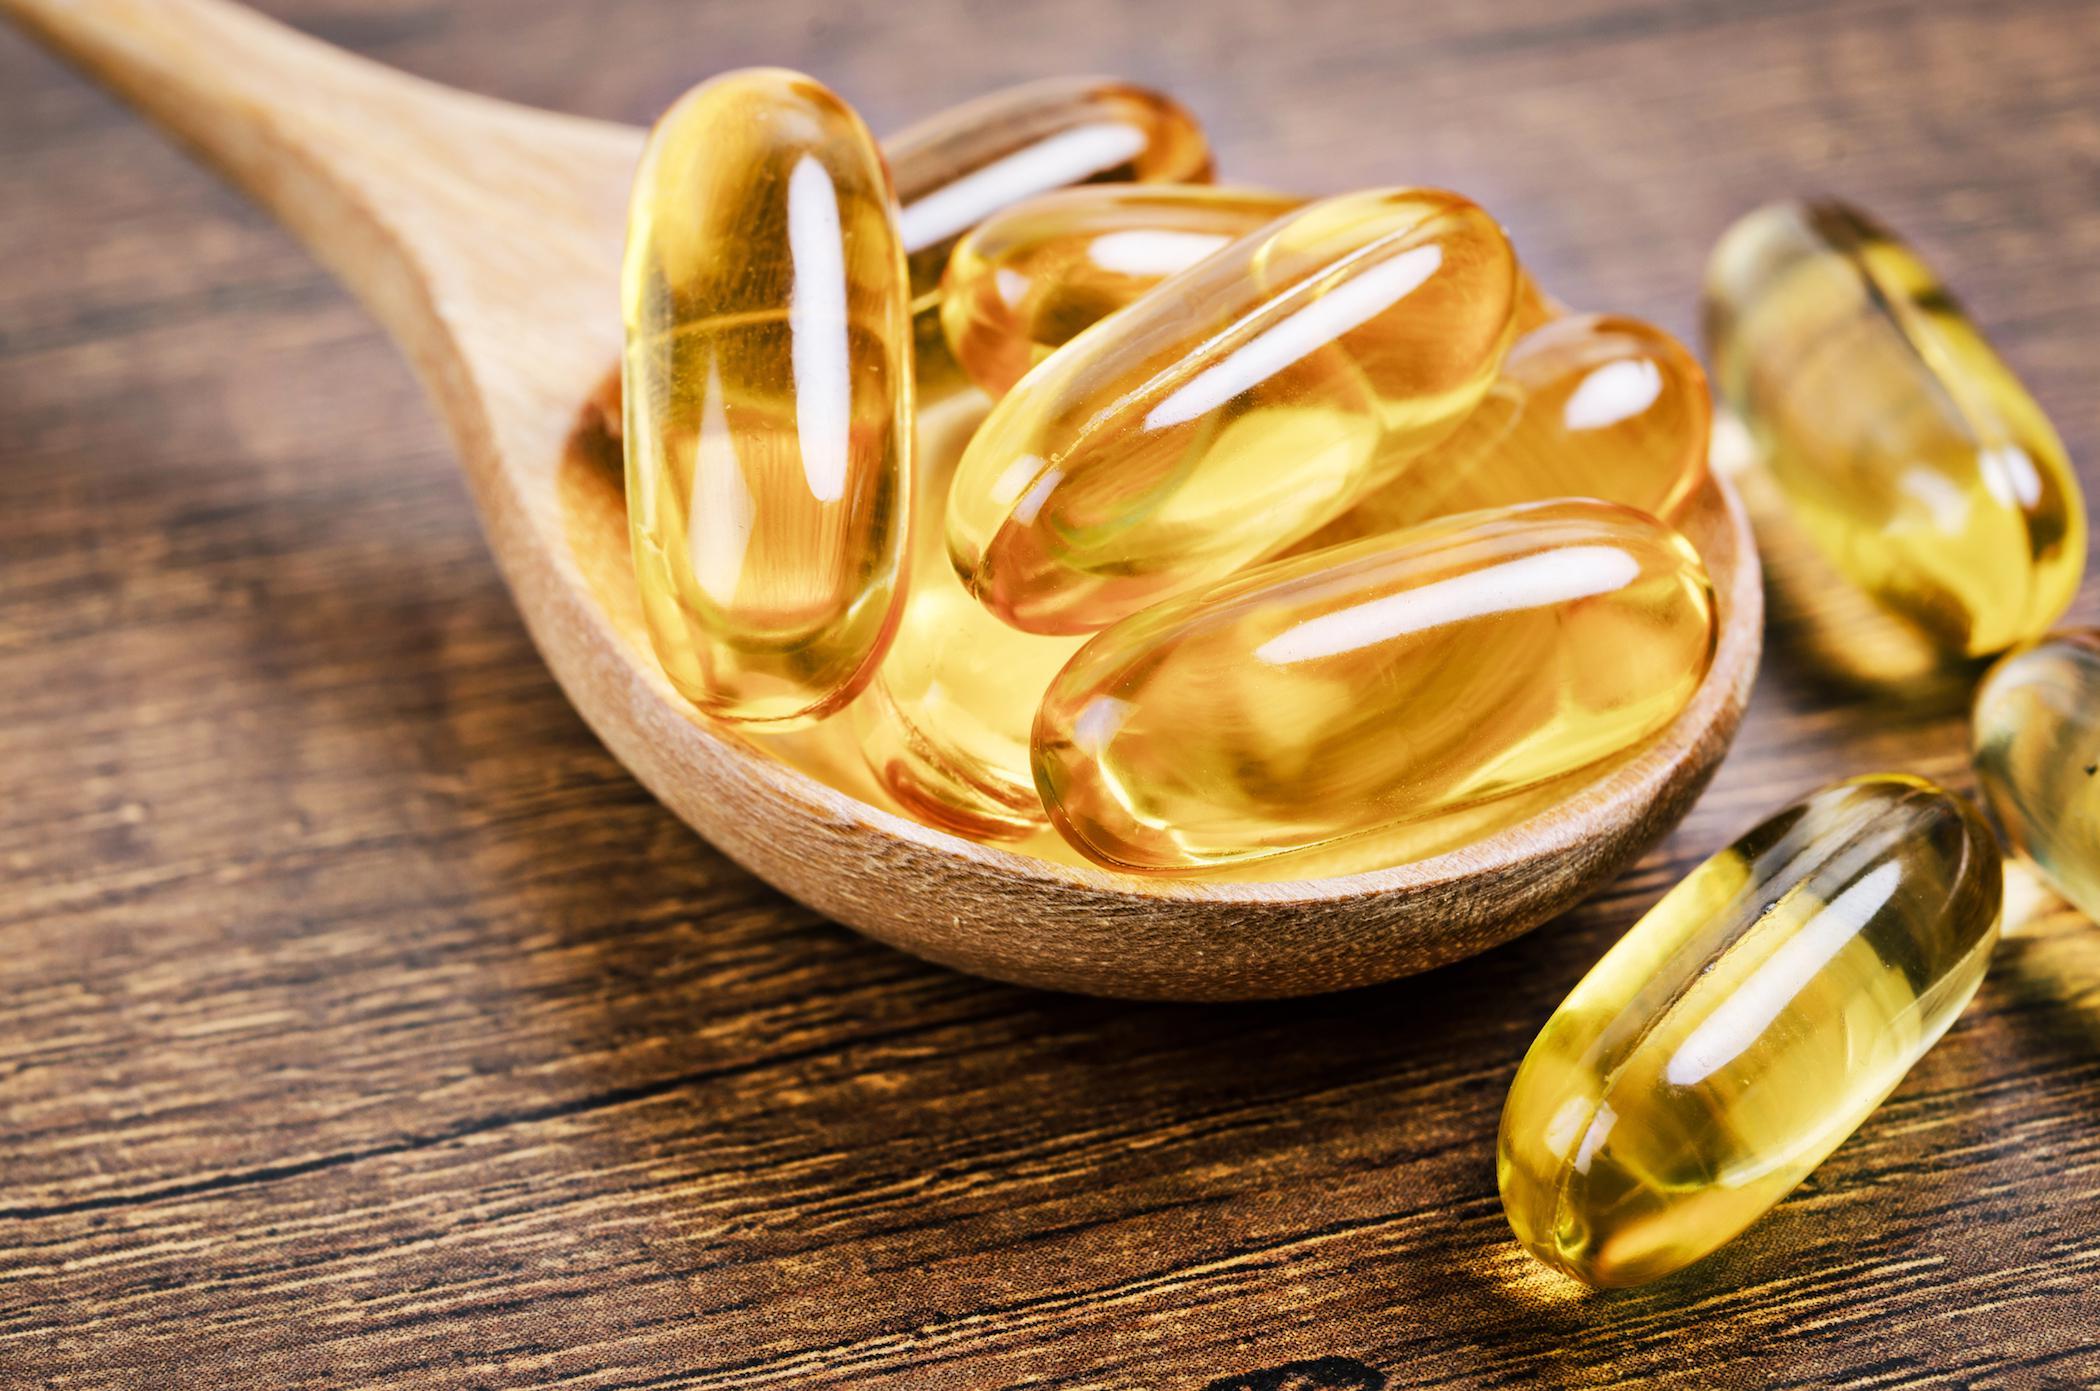 fish oil pills wooden spoon